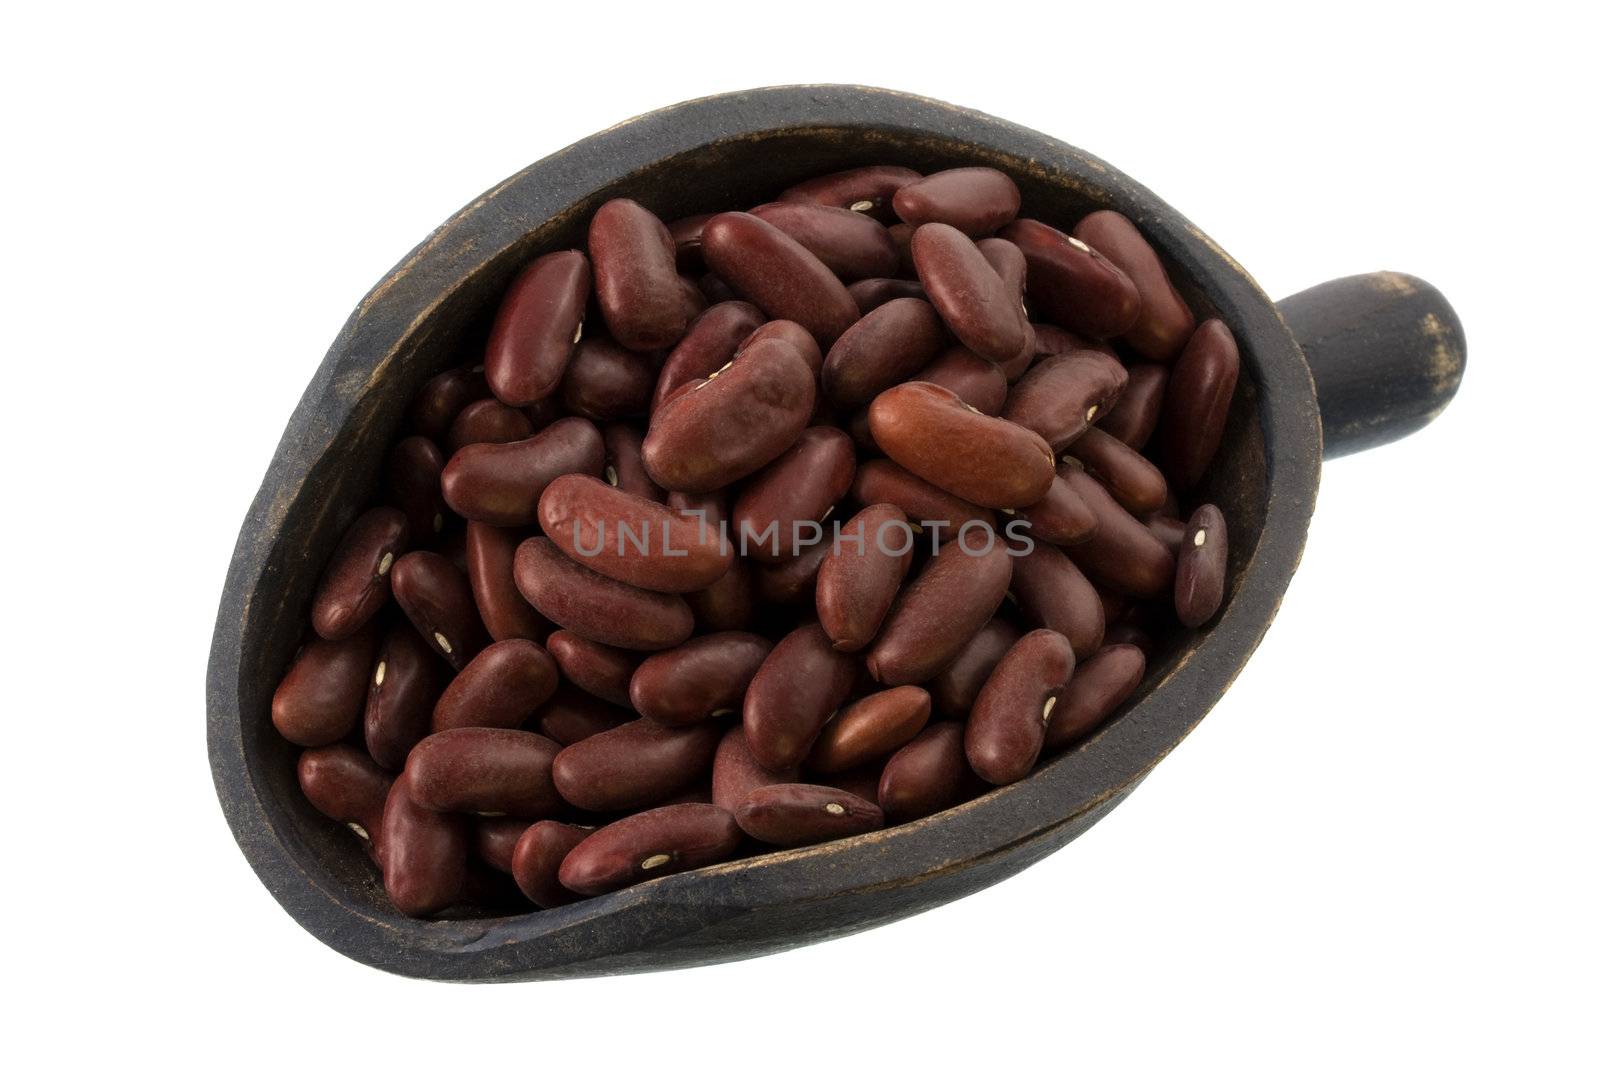 scoop od red kidney beans by PixelsAway